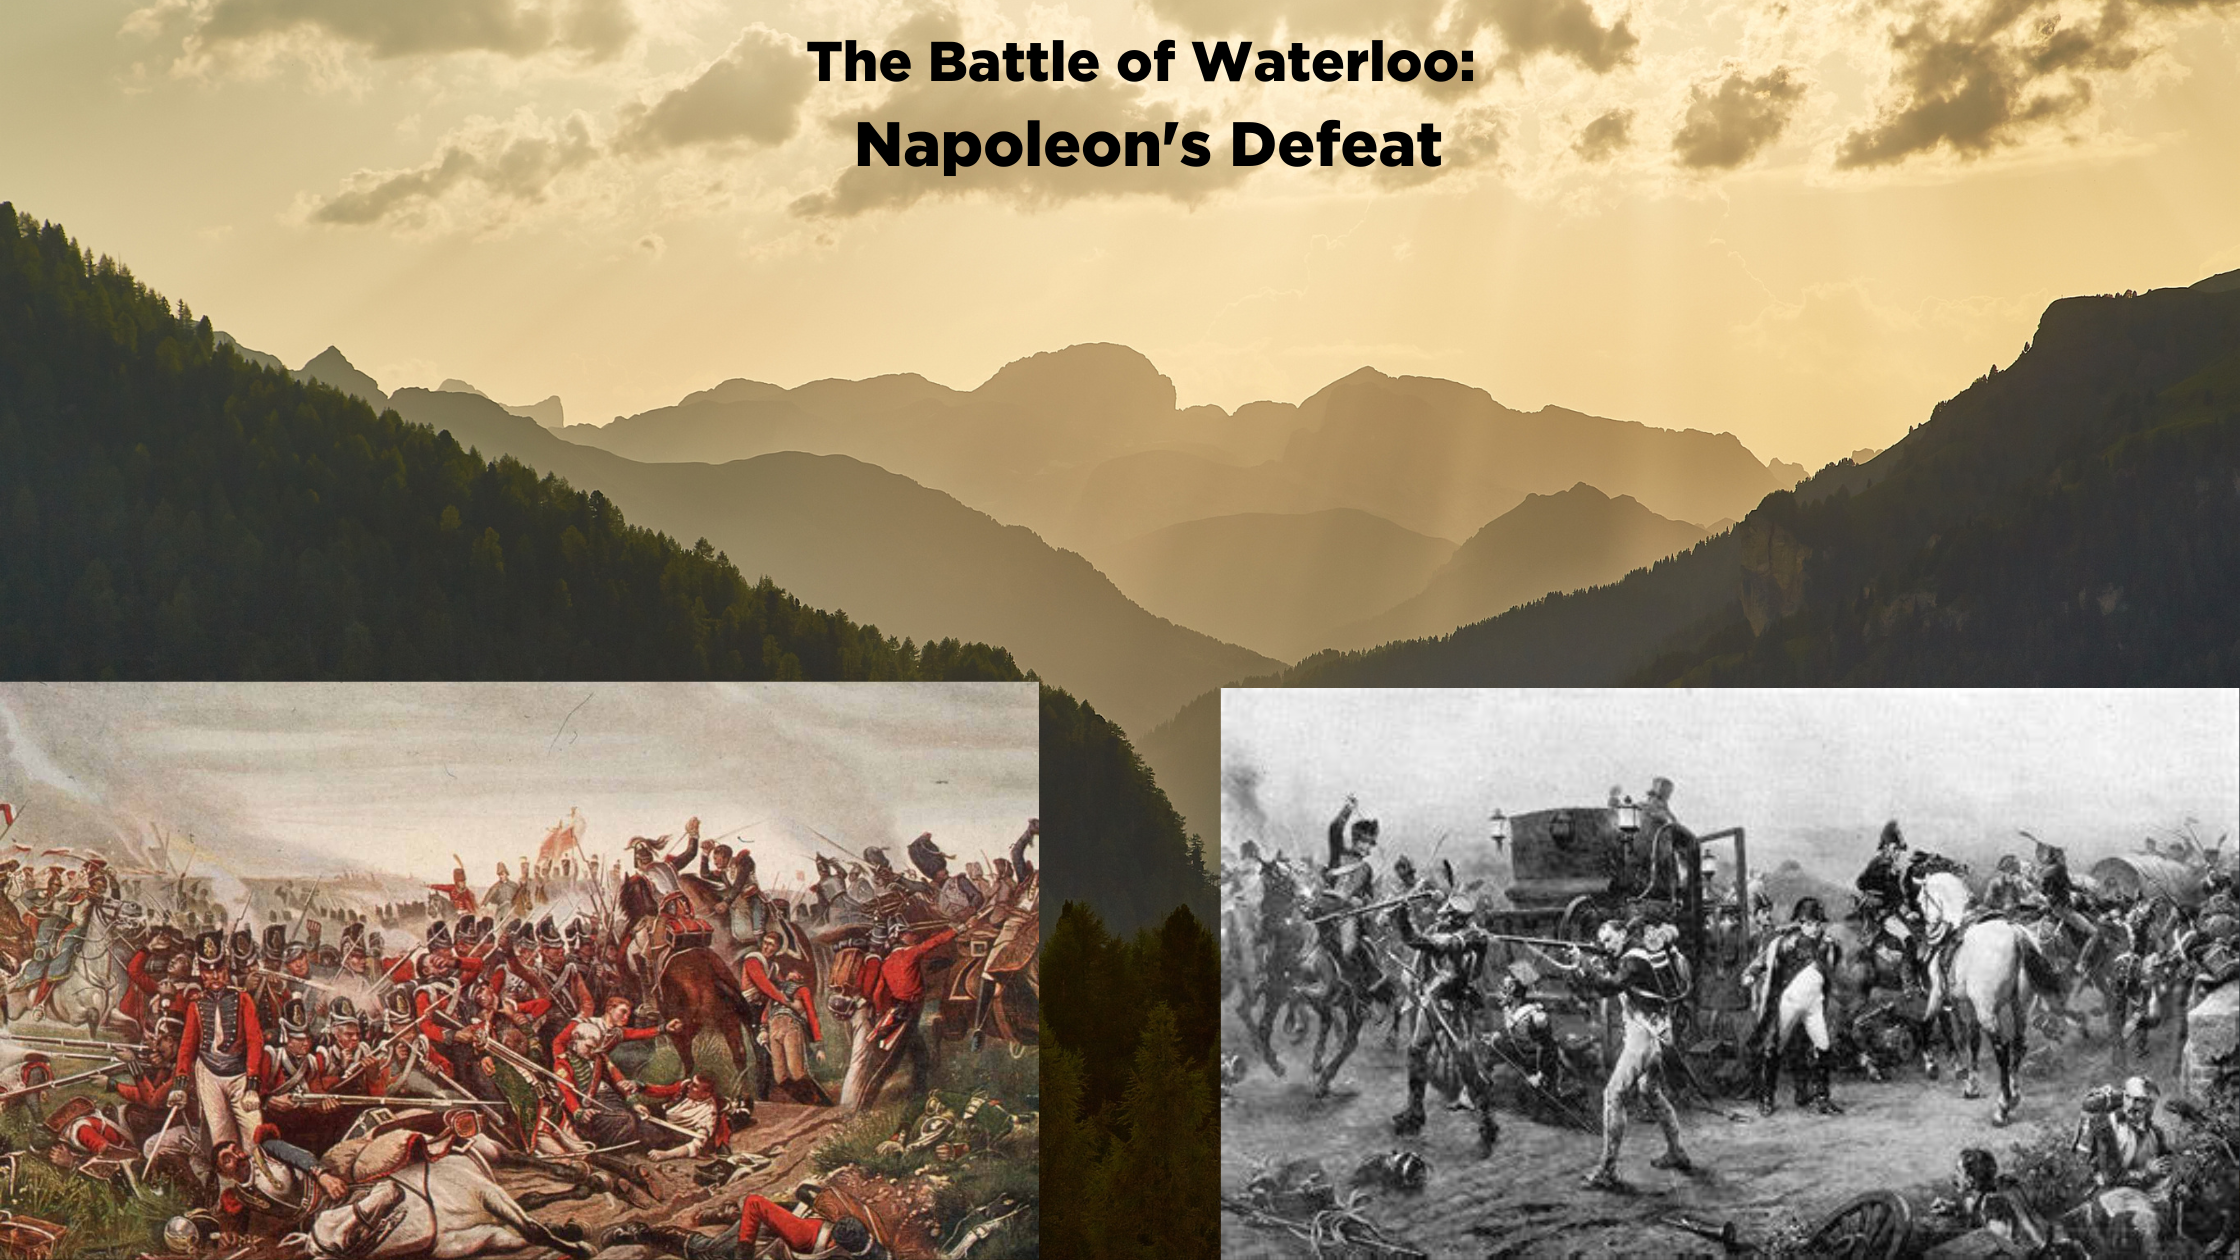 The Battle of Waterloo: Napoleon's Defeat